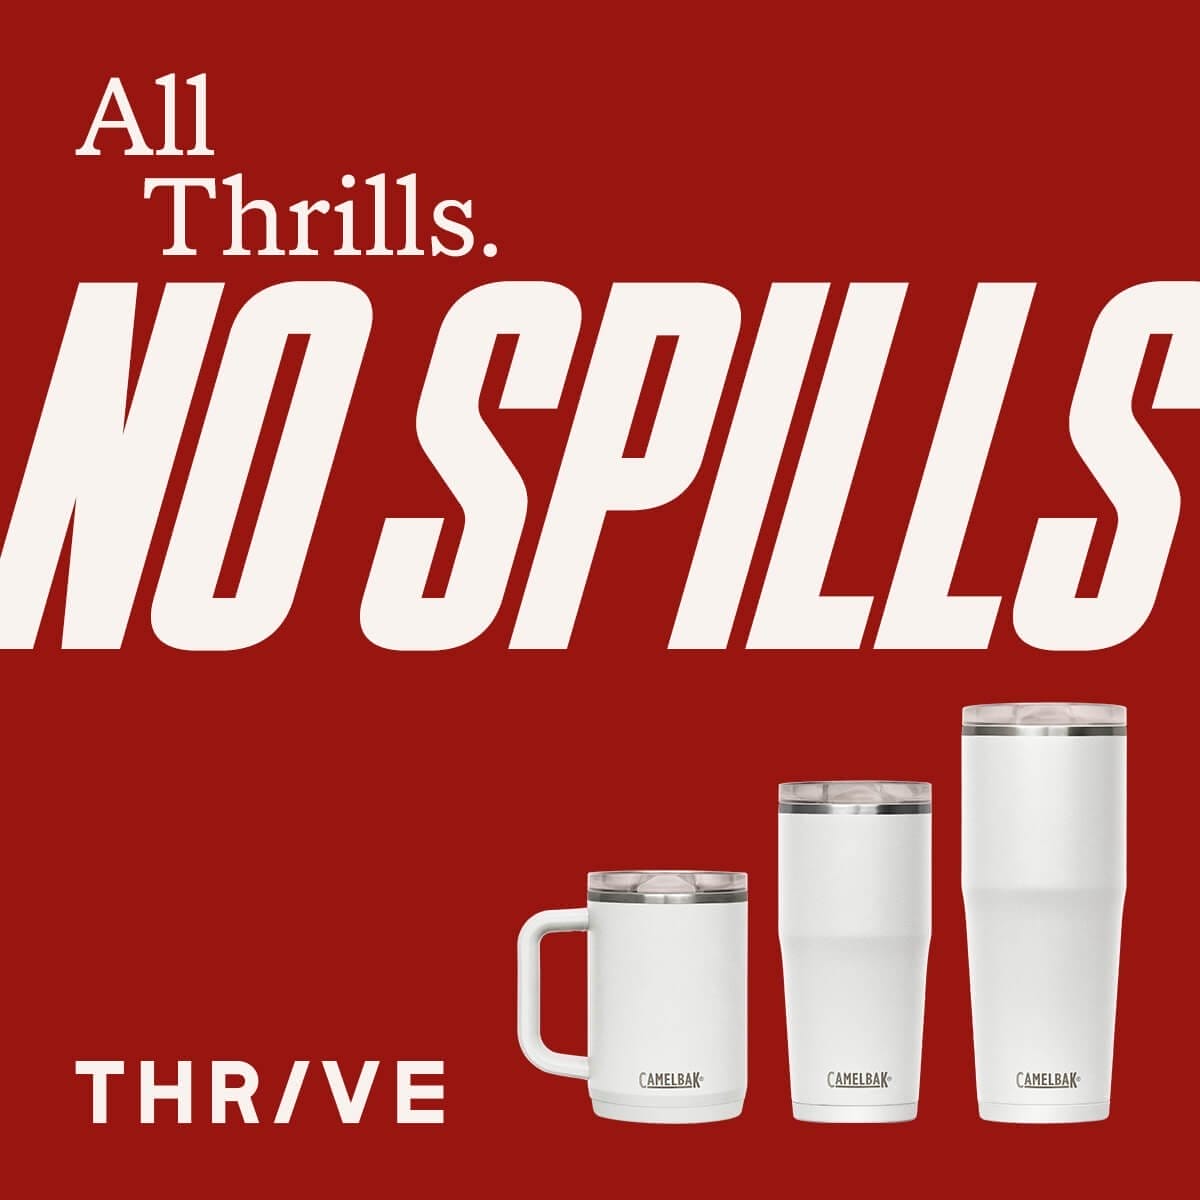 All Thrills. No Spills. Thrive.